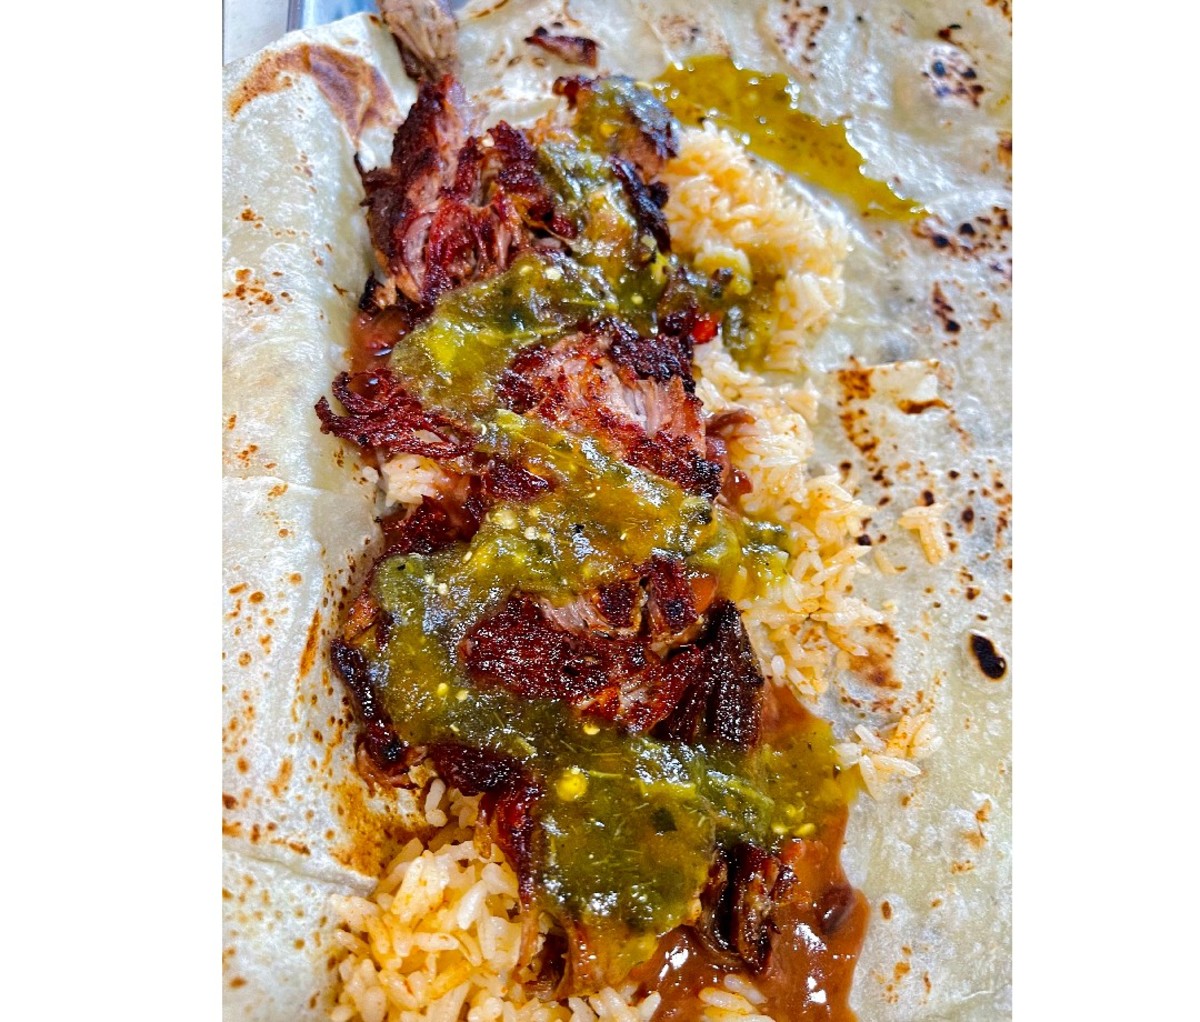 Open burrito ingredients on a tortilla from Portland's Saint Burrito